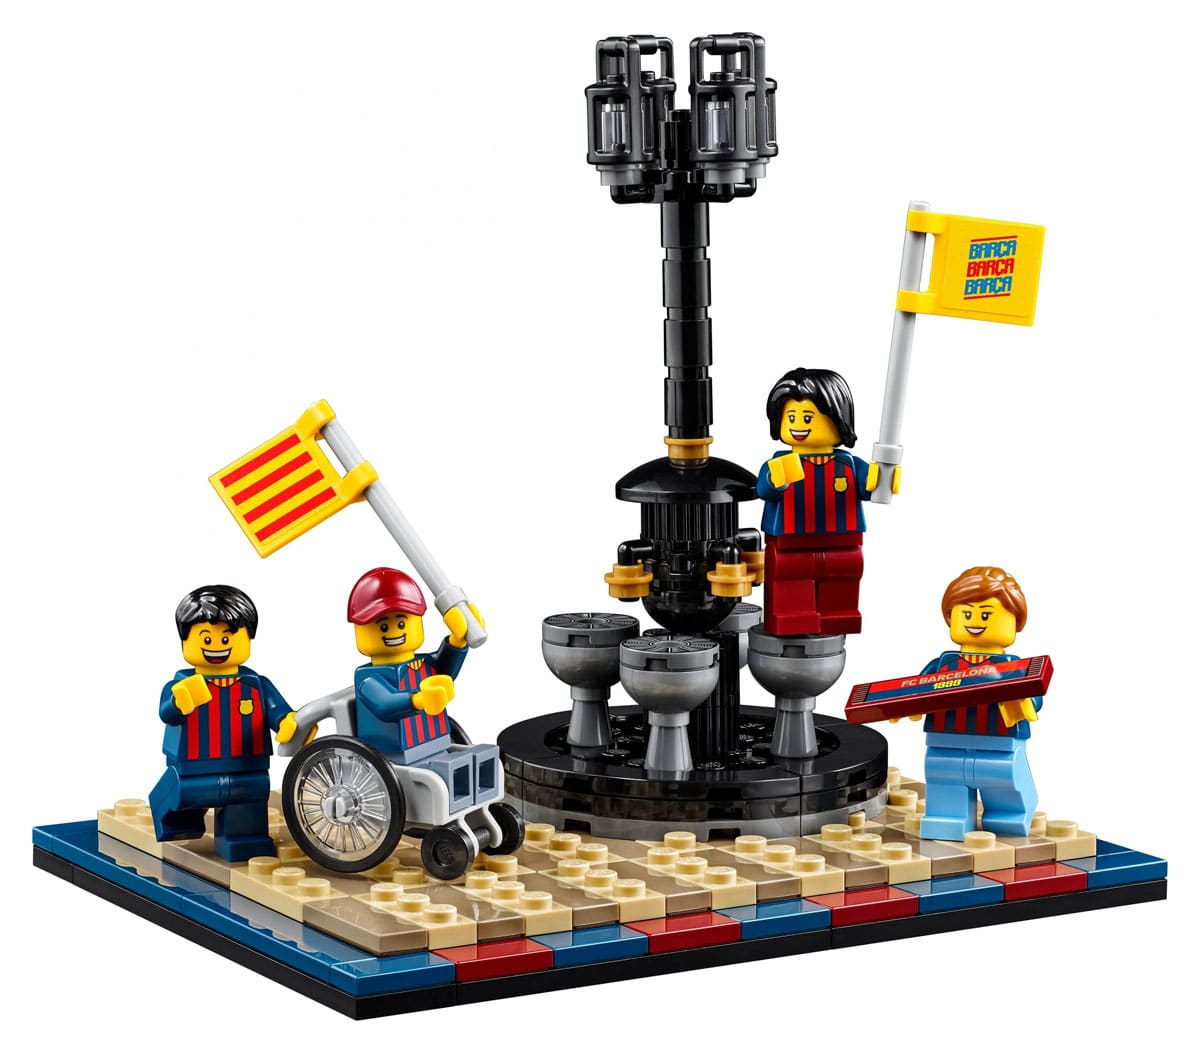 LEGO 40485 FC Barcelona Celebration (Празднование ФК Барселона)